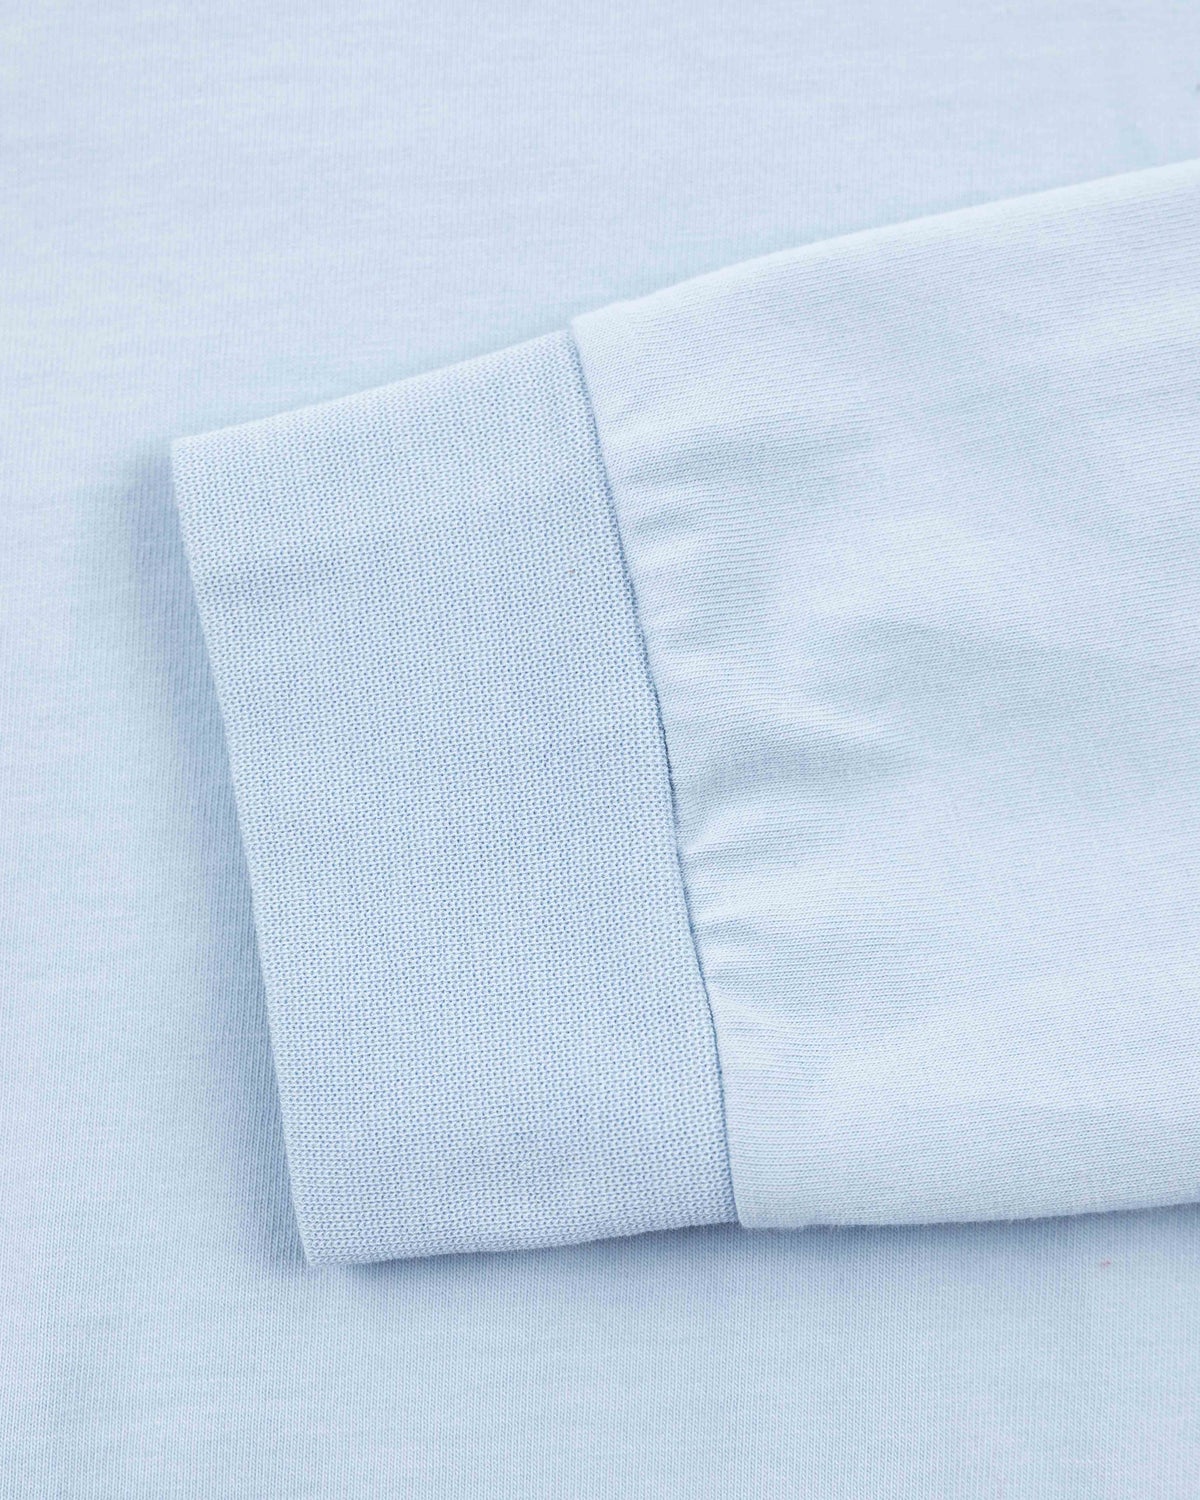 Crew neck cotton longsleeve - Universal Blue